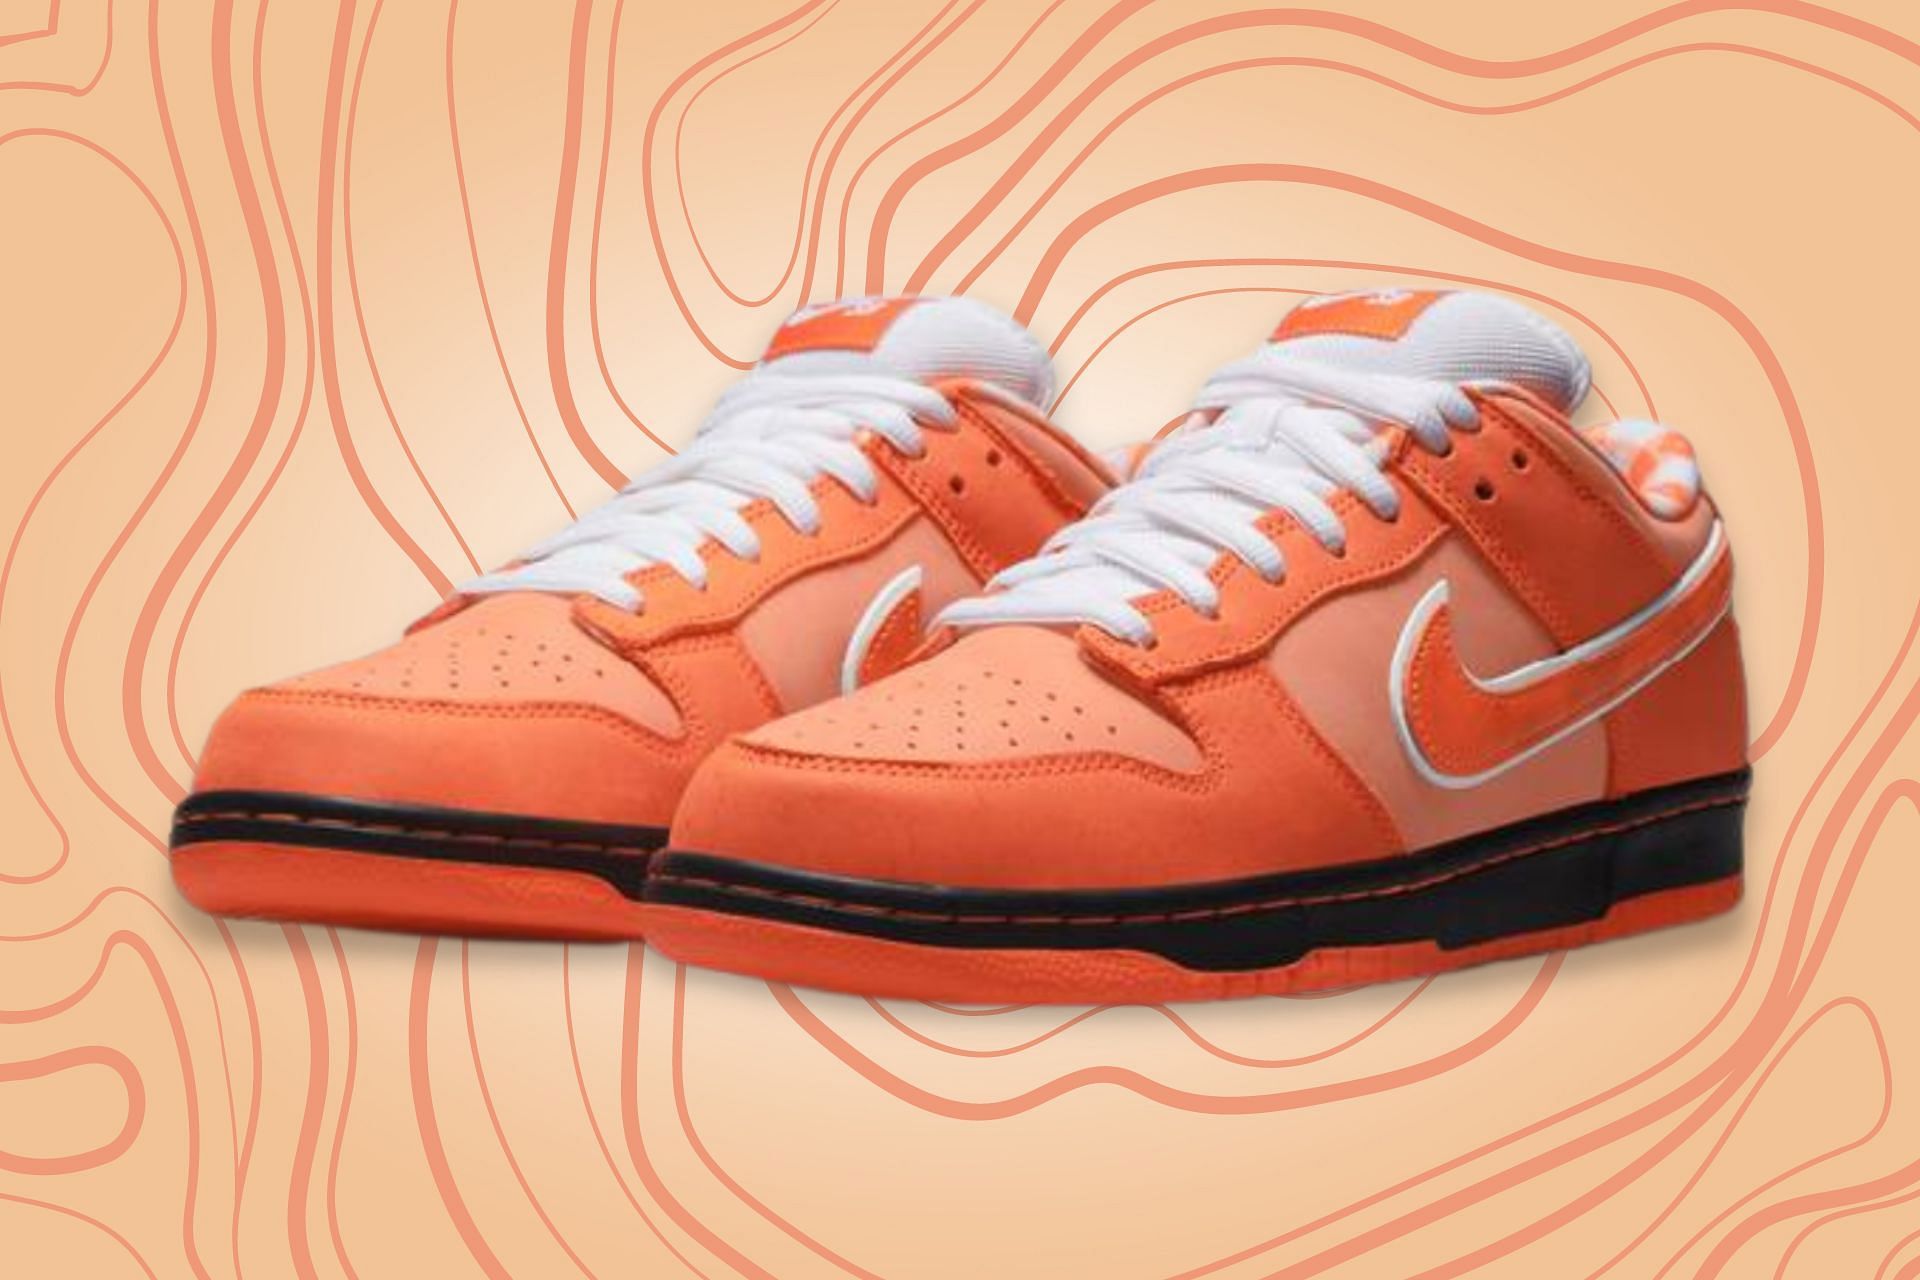 Concepts x Nike SB Dunk Low Orange Lobster shoes (Image via Nike)